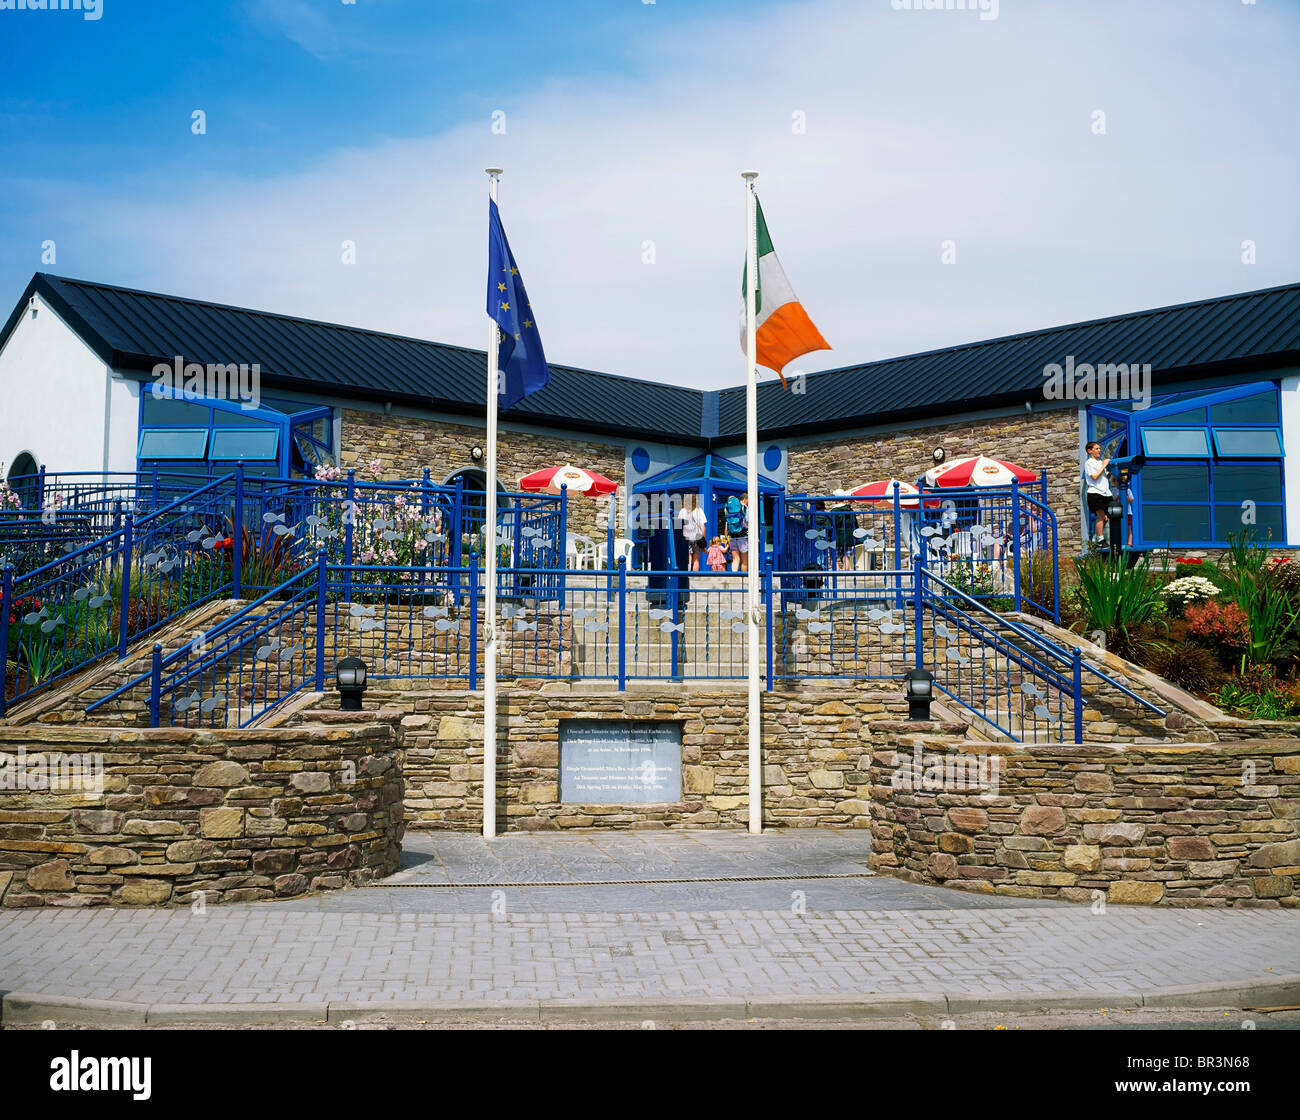 Penisola di Dingle, Co. Kerry, Irlanda, Aquaworld Foto Stock